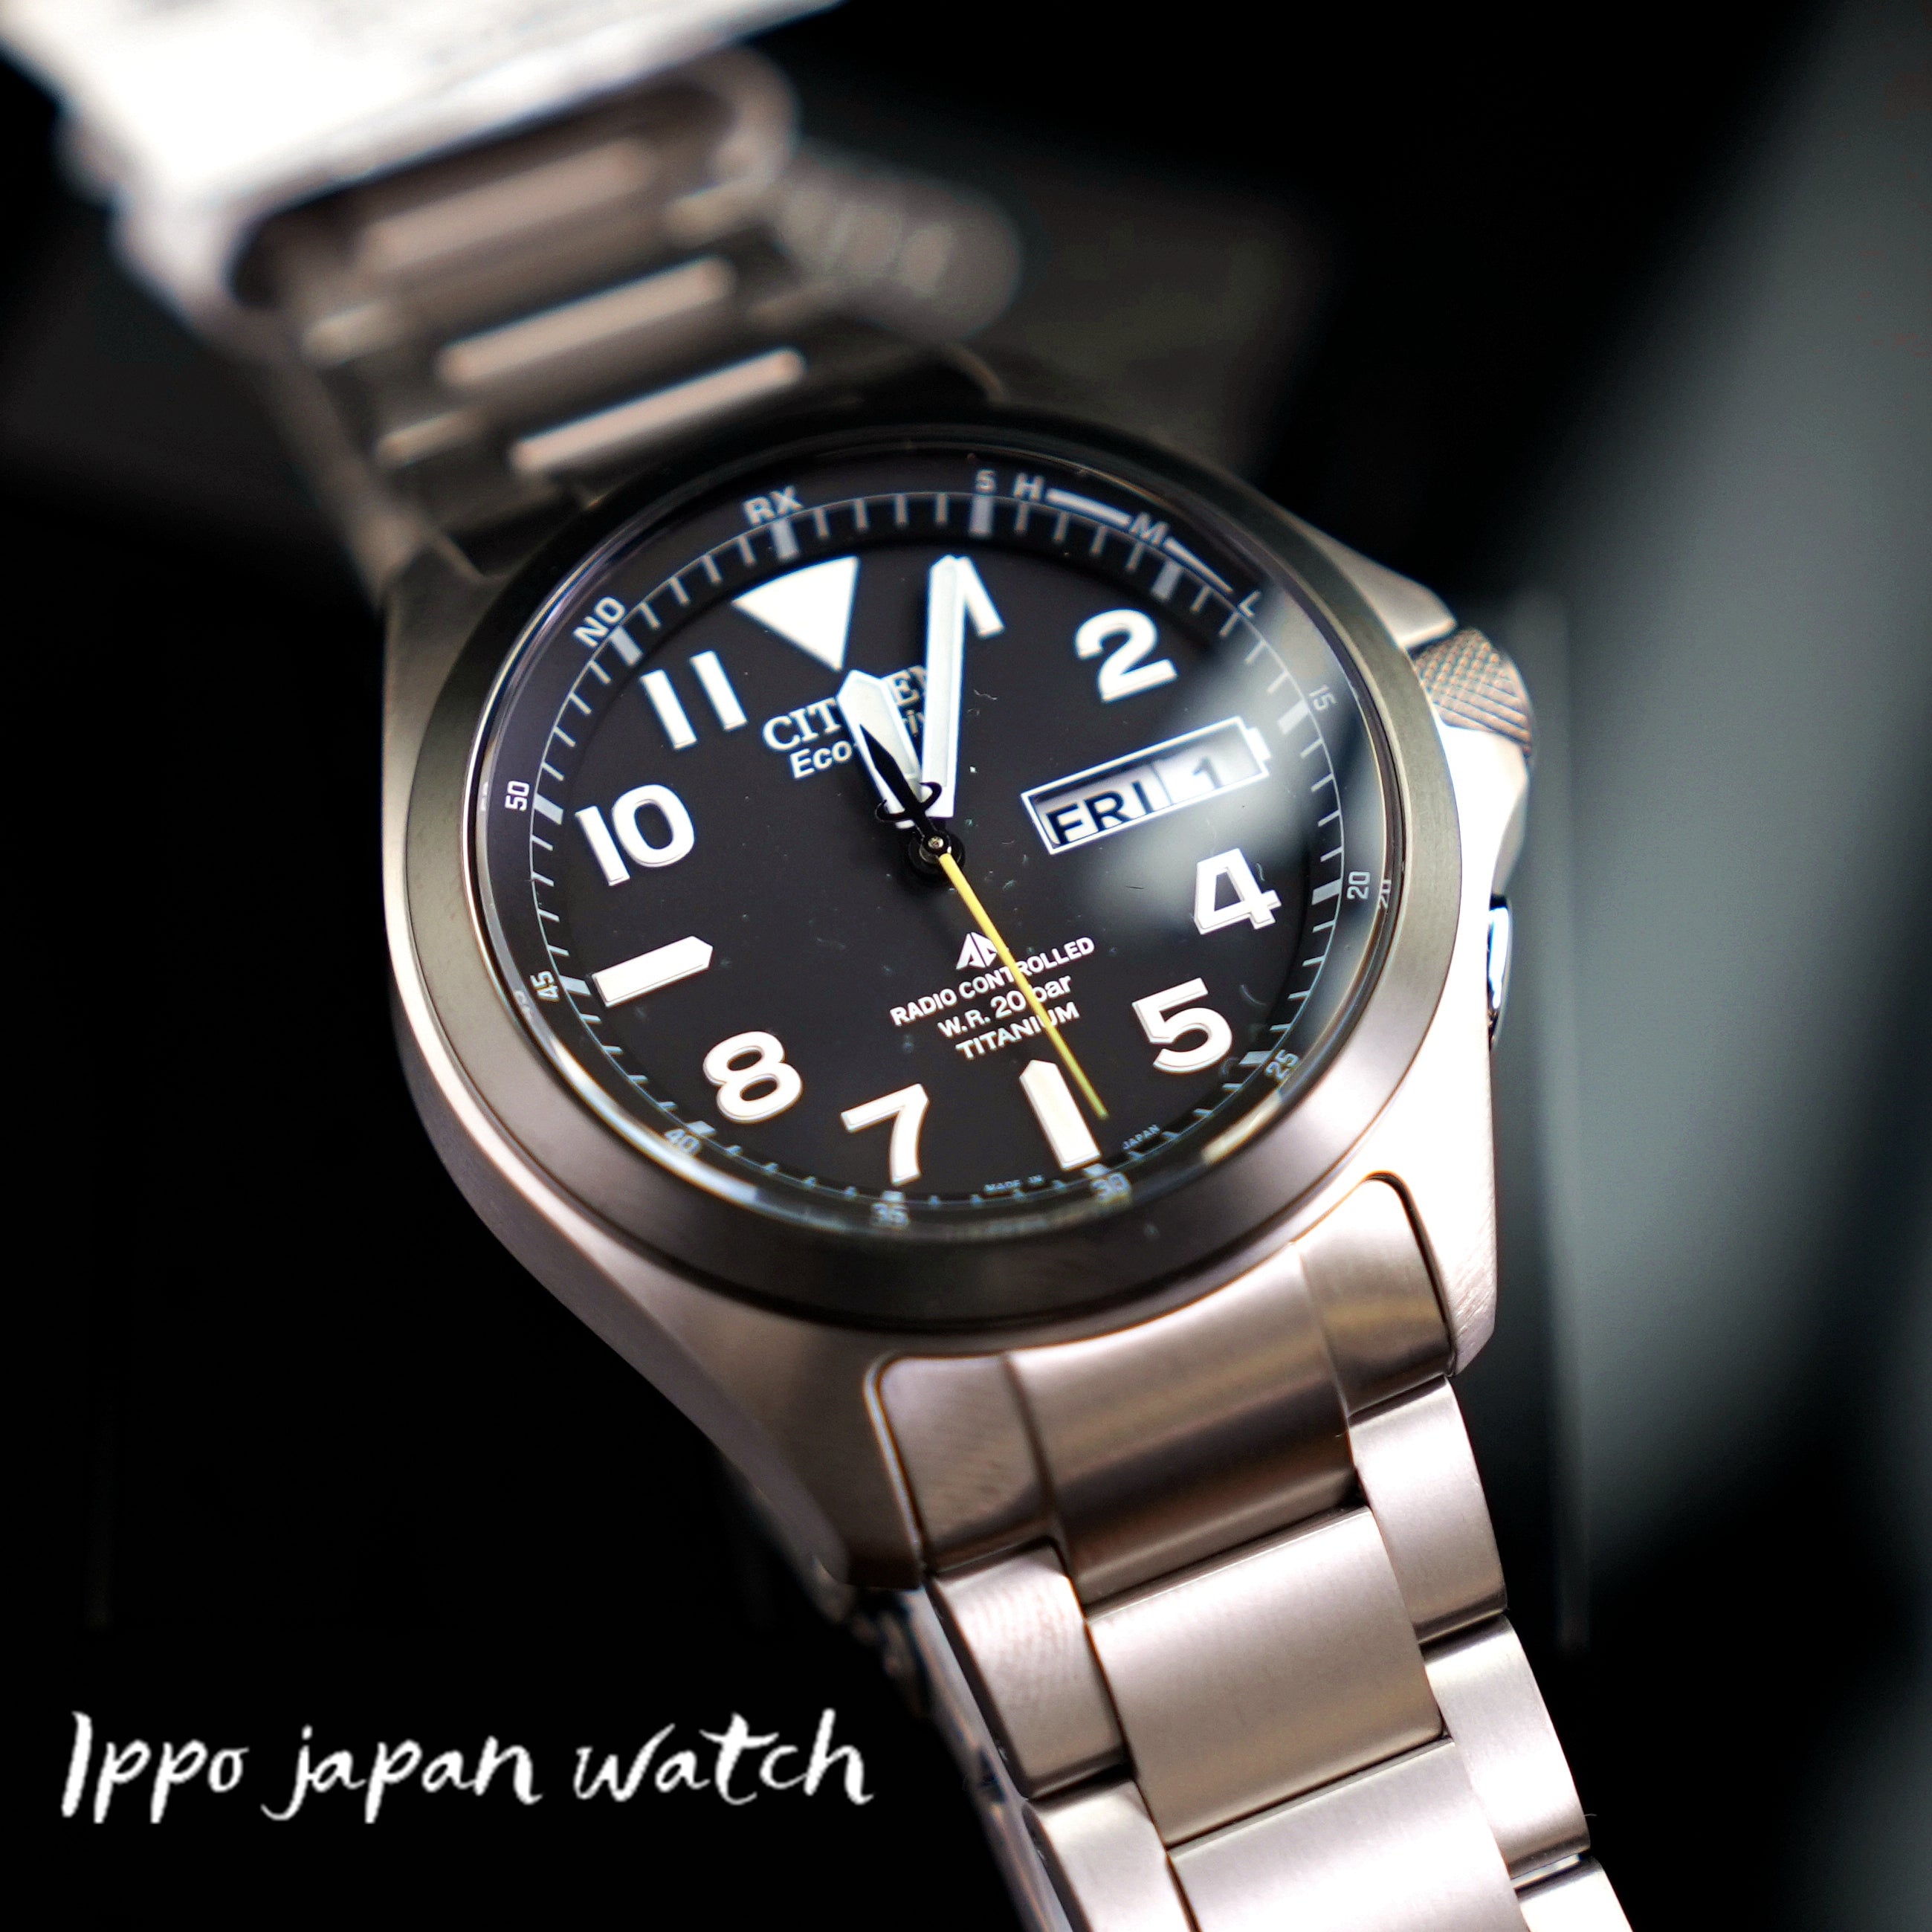 Citizen Promaster Land PMD56-2952 Eco-Drive Titanium Men's Watch - IPPO JAPAN WATCH 